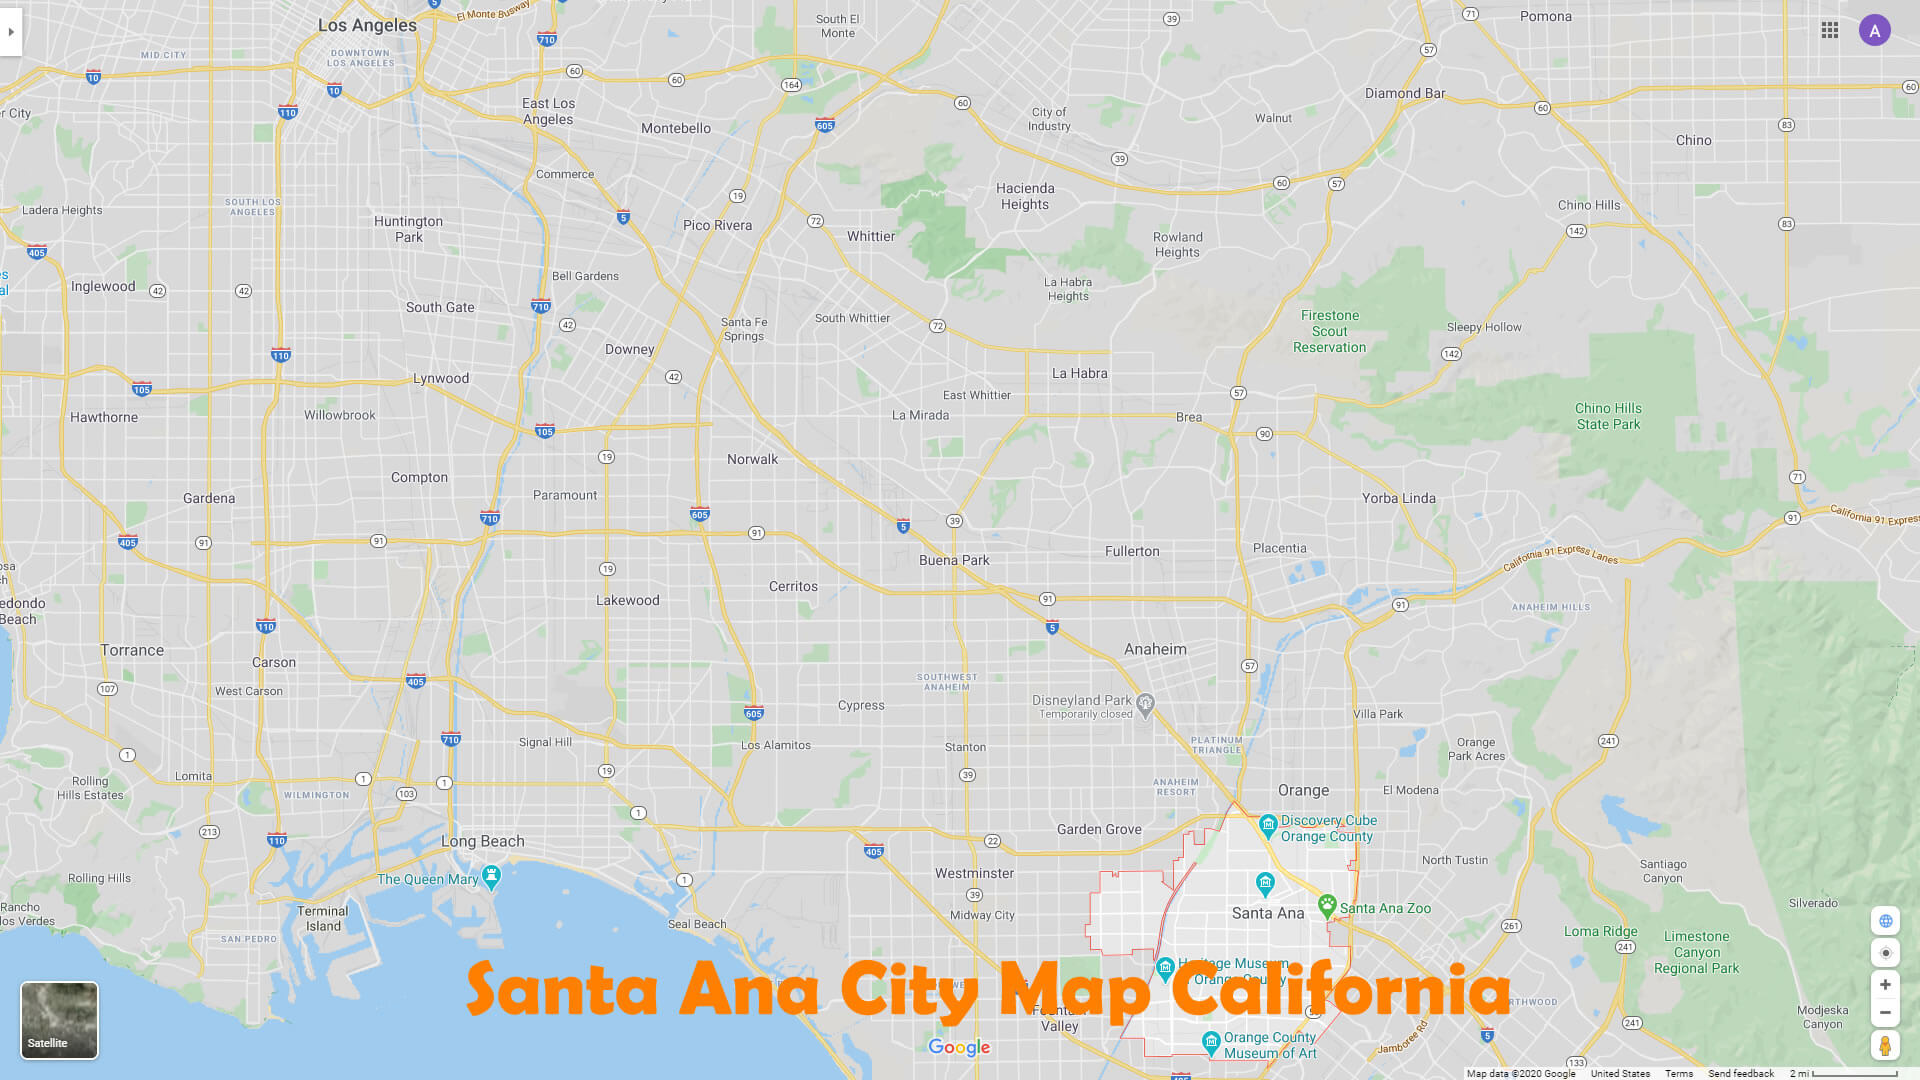 Santa Ana City Map California